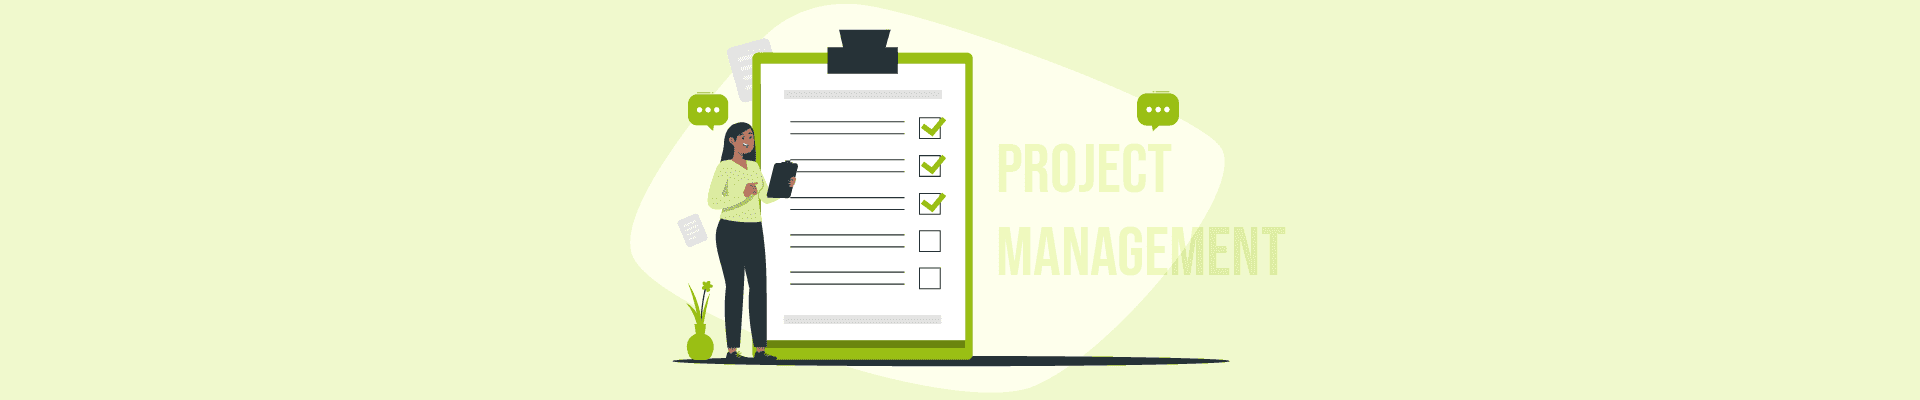 Project Management Evaluation Checklist